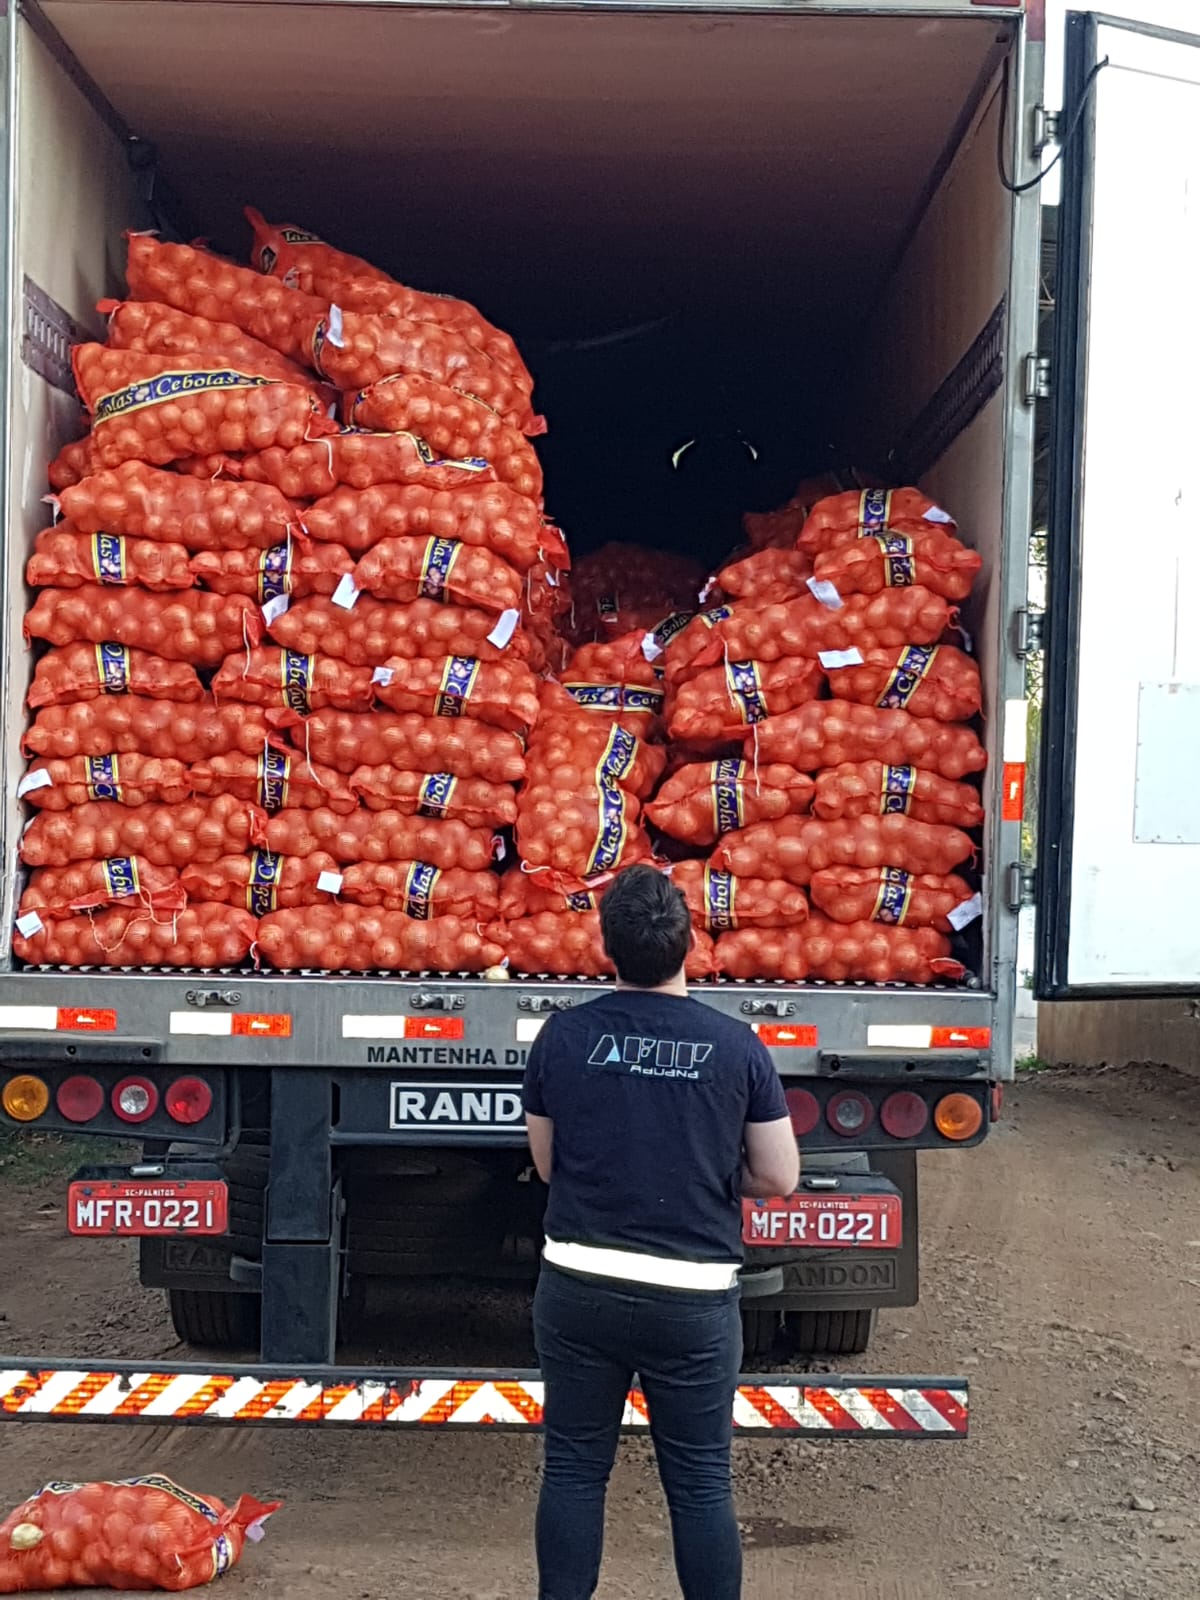 Aduana advirtió irregularidades en una exportación de 28 toneladas de cebollas a Brasil a través de Corrientes imagen-2